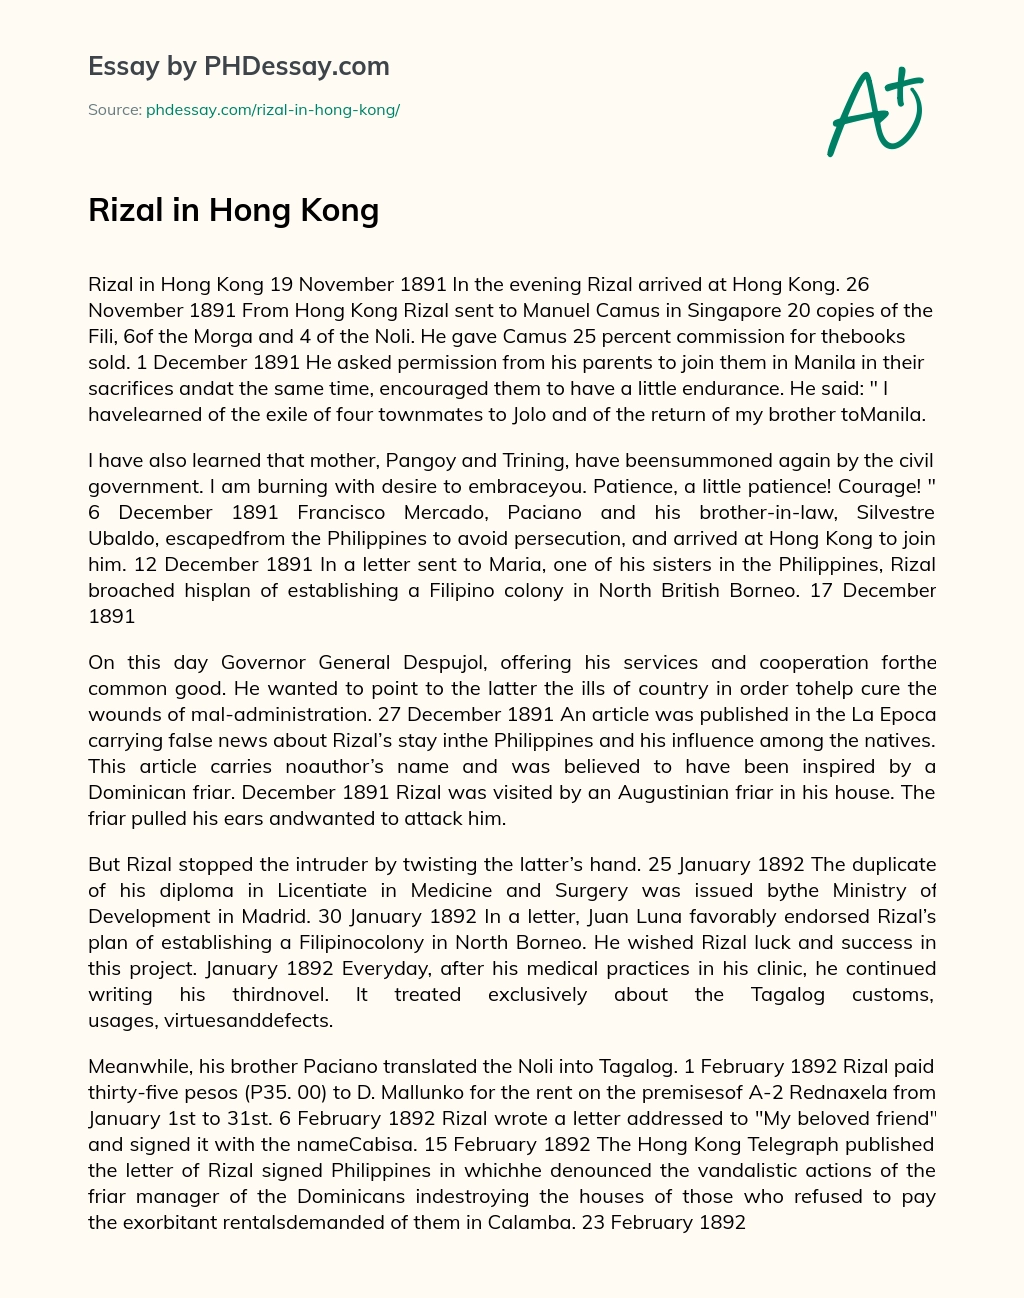 Rizal in Hong Kong essay